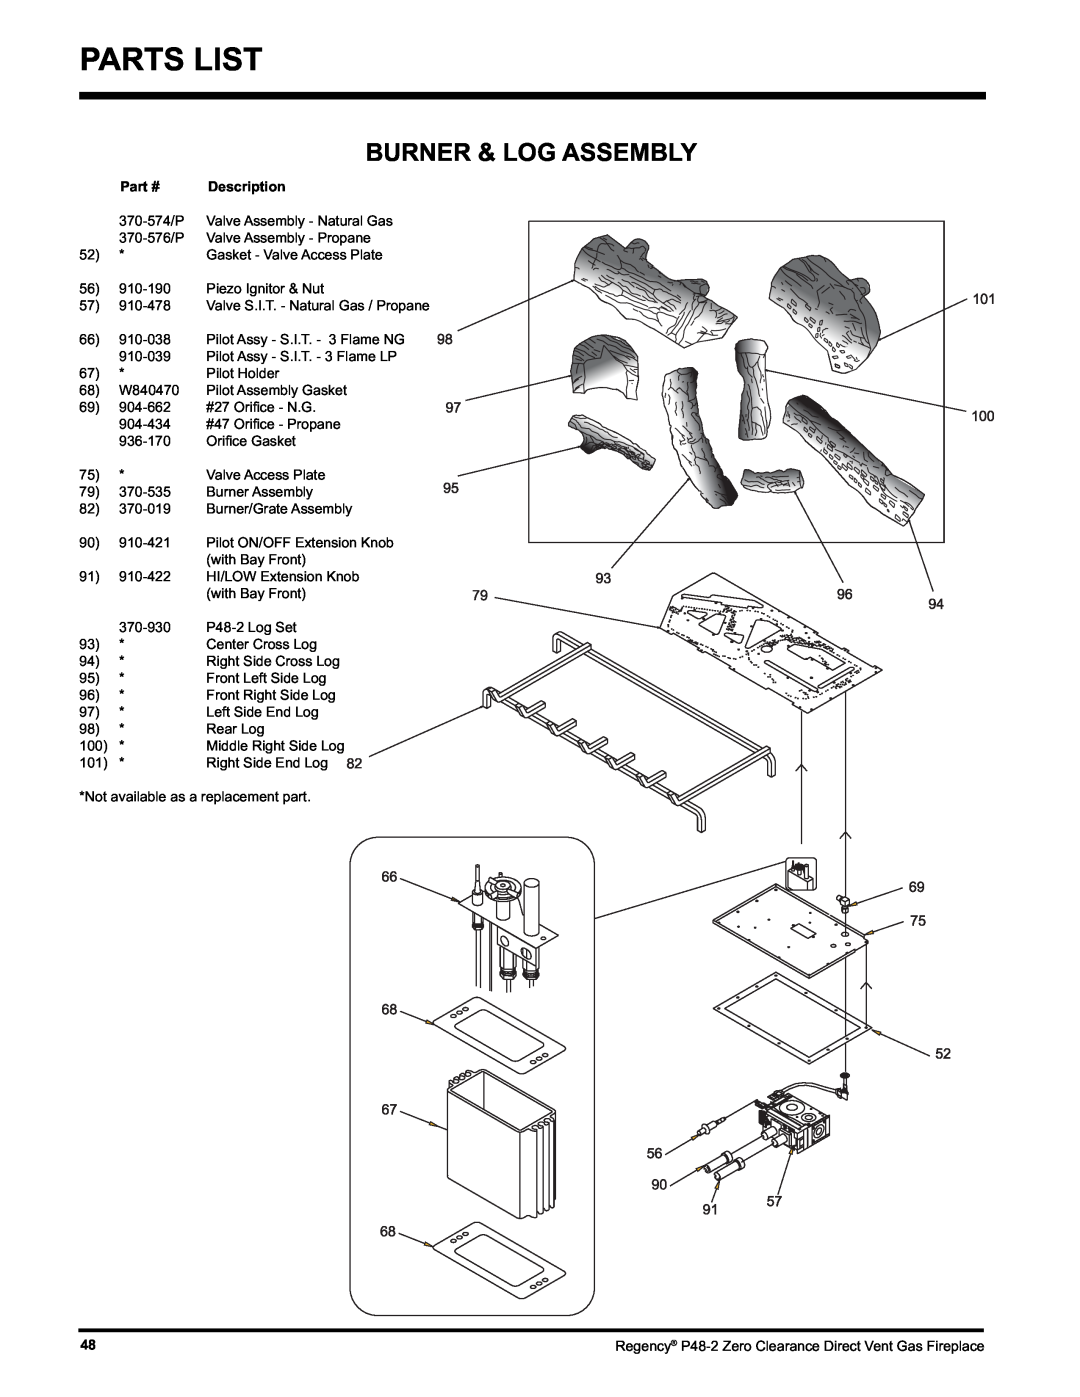 Regency P48-2 installation manual Parts List, Burner & Log Assembly, Part #, Description 